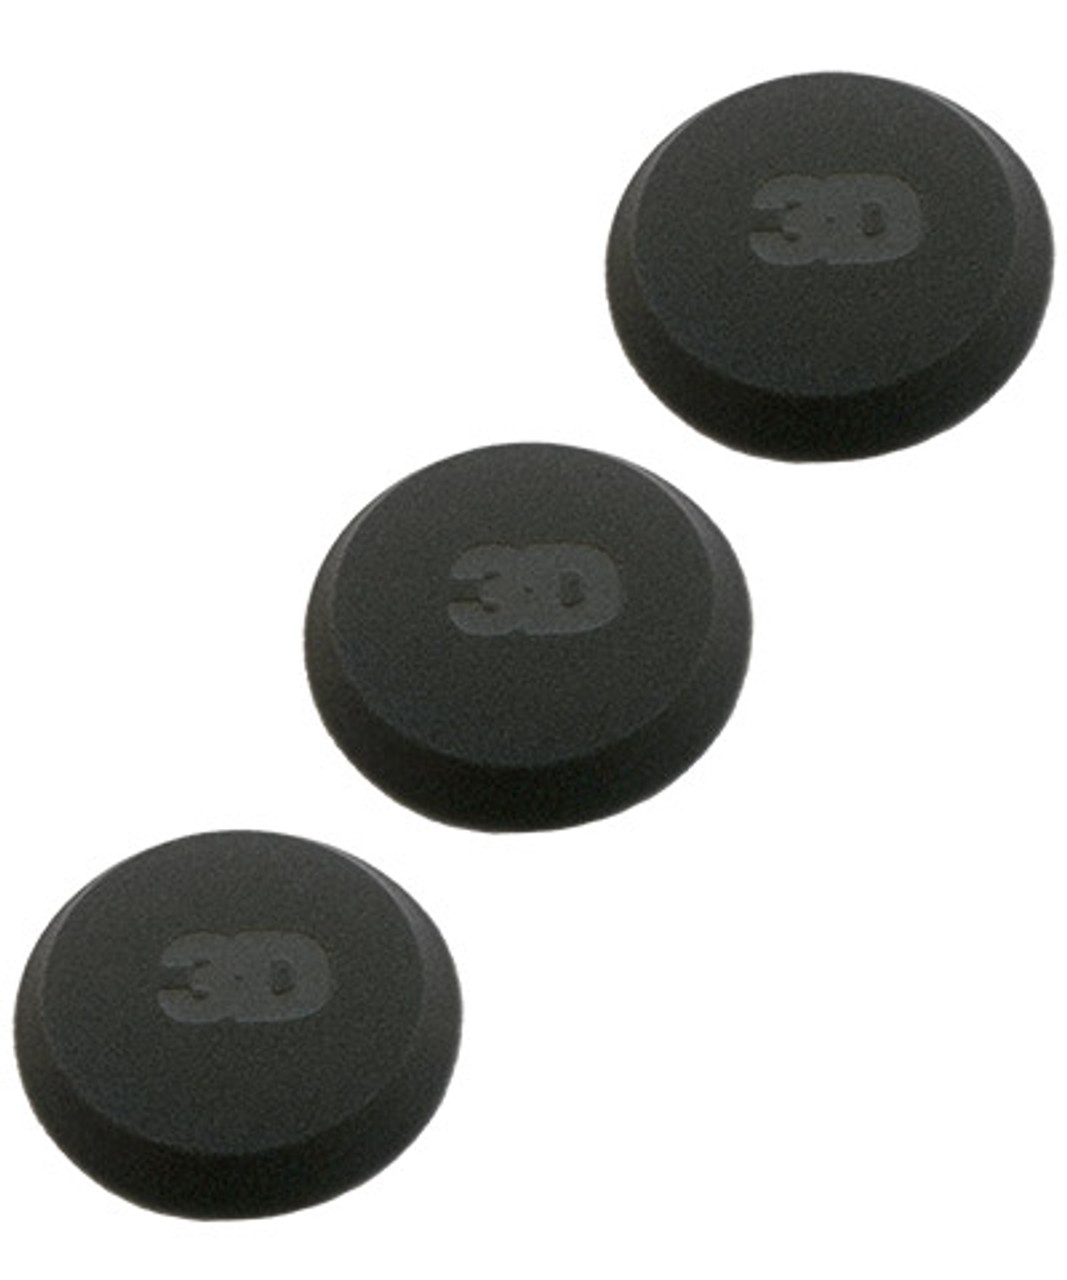 3D Black Foam Applicator Pad - 3 Pack